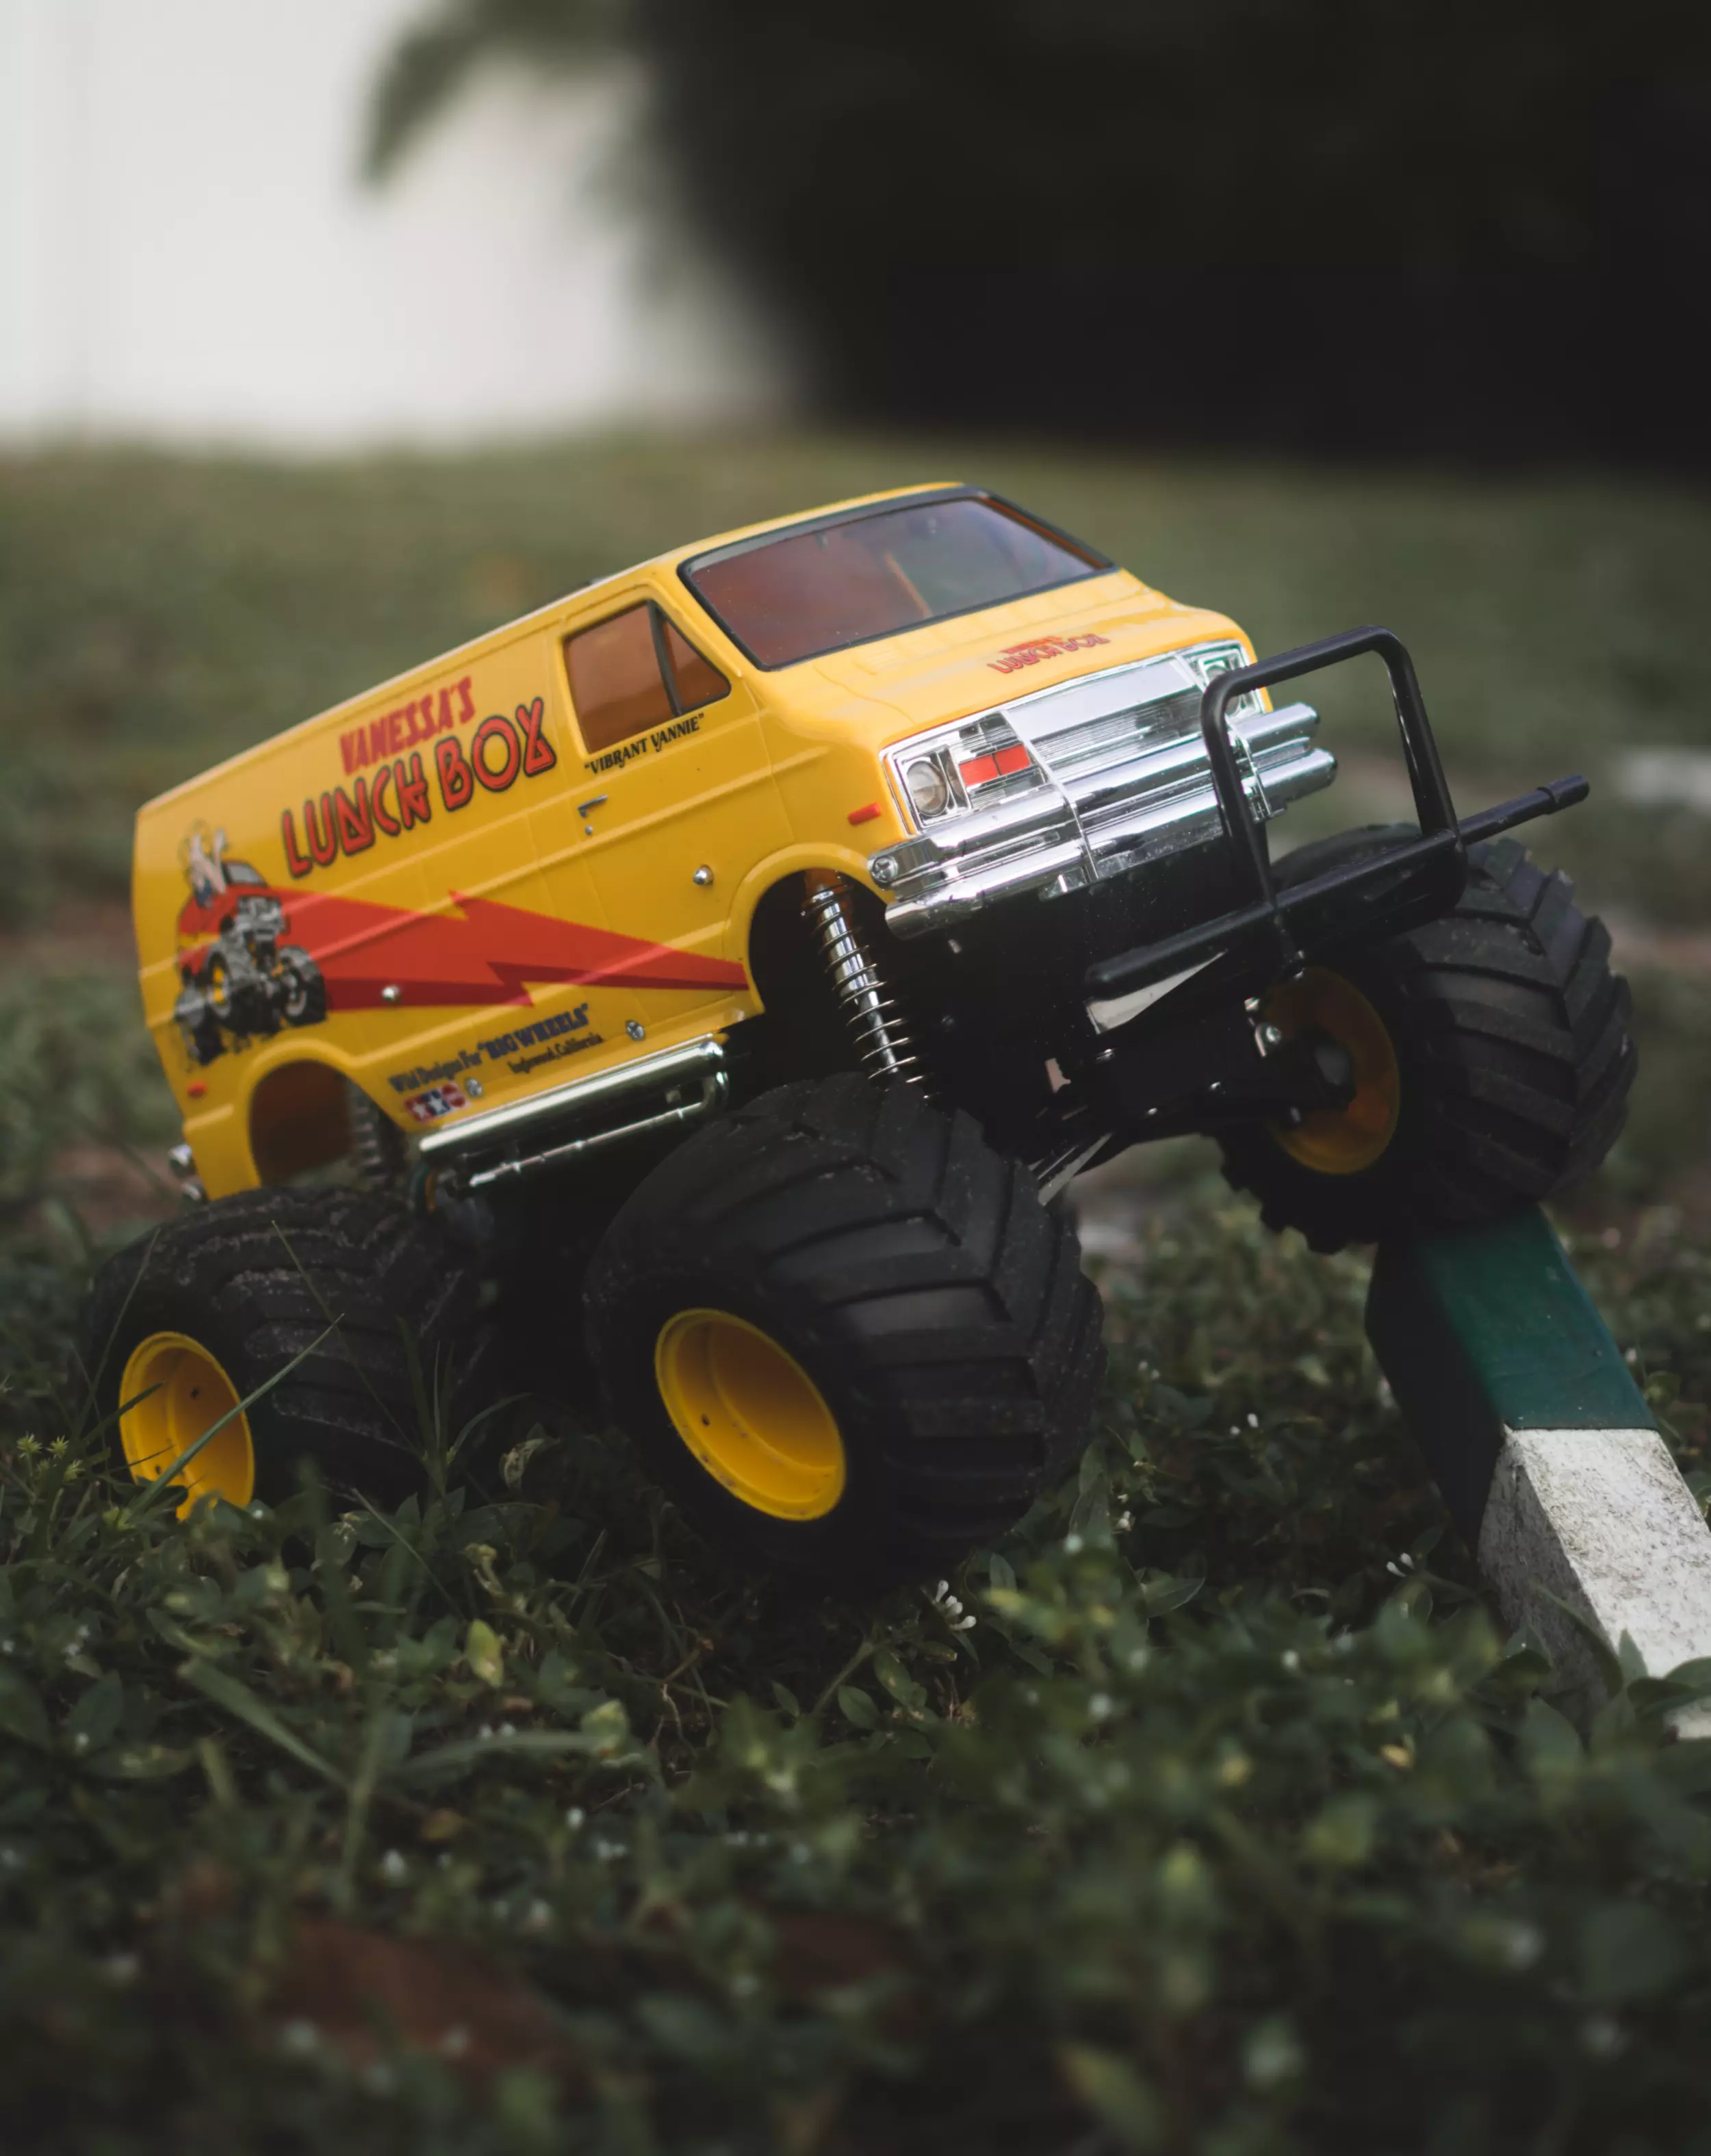 A Monster Truck's Car-Crushing Comeback - WSJ